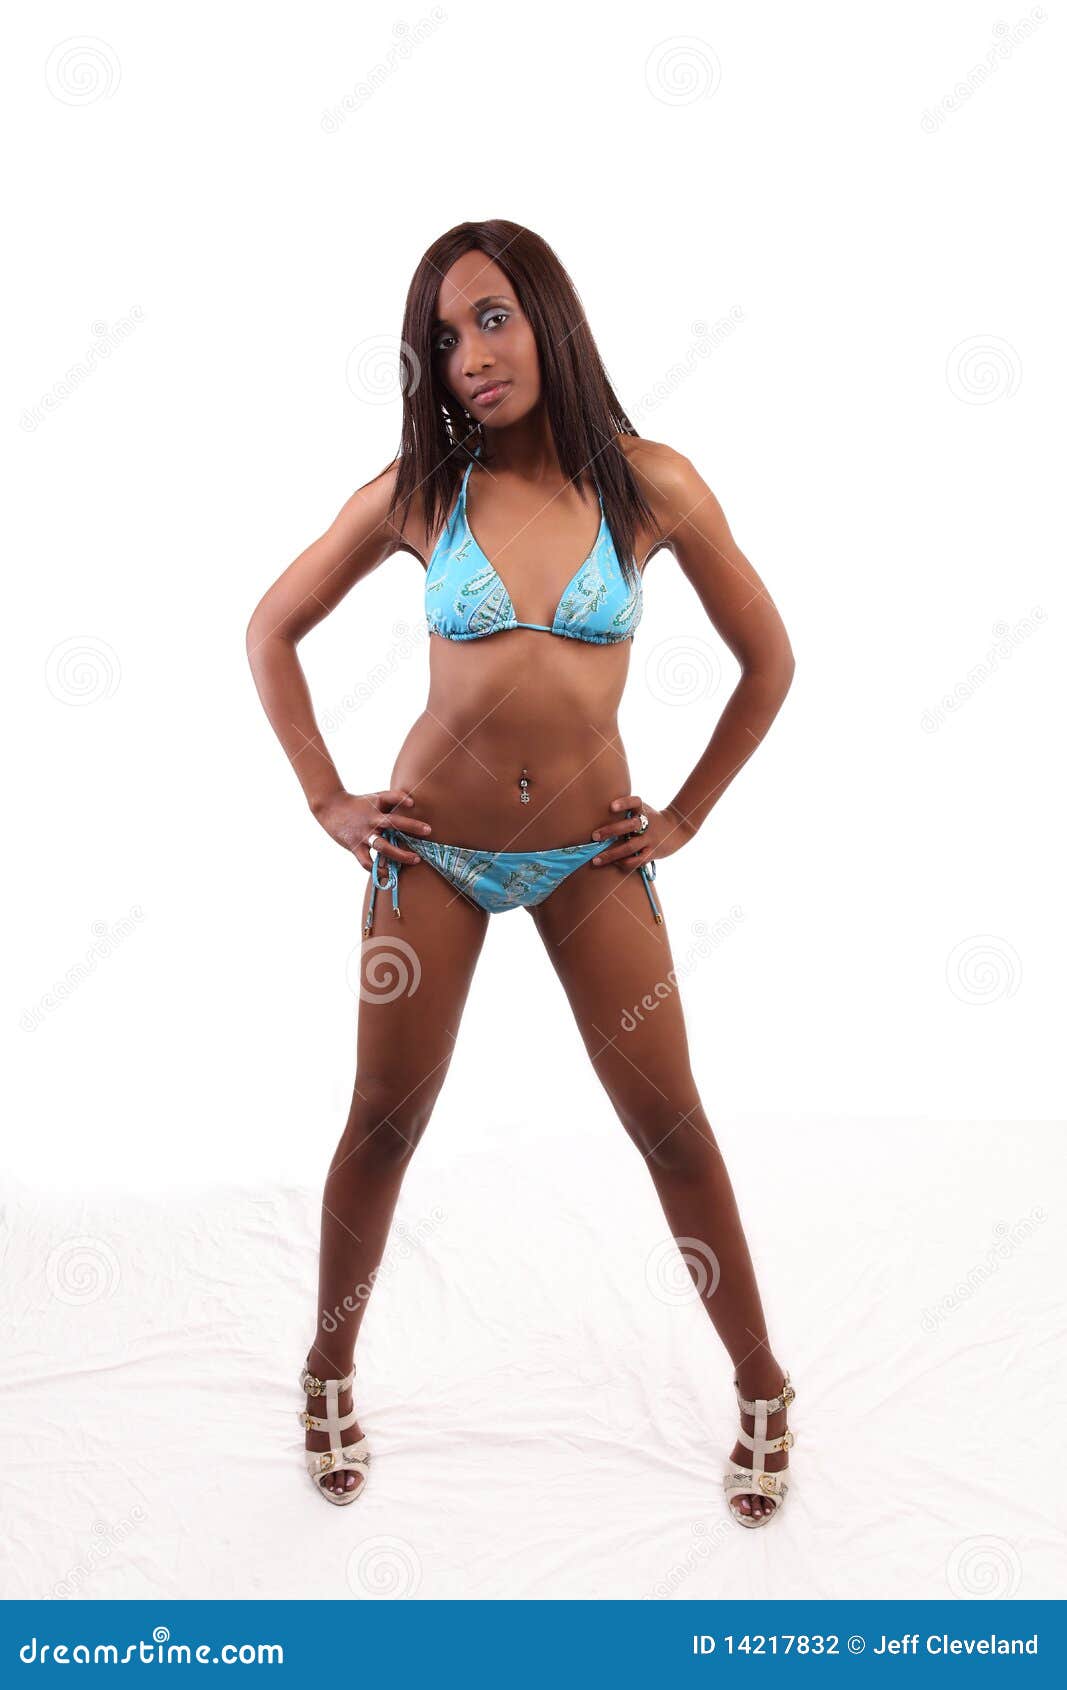 https://thumbs.dreamstime.com/z/young-african-american-woman-blue-bikini-14217832.jpg